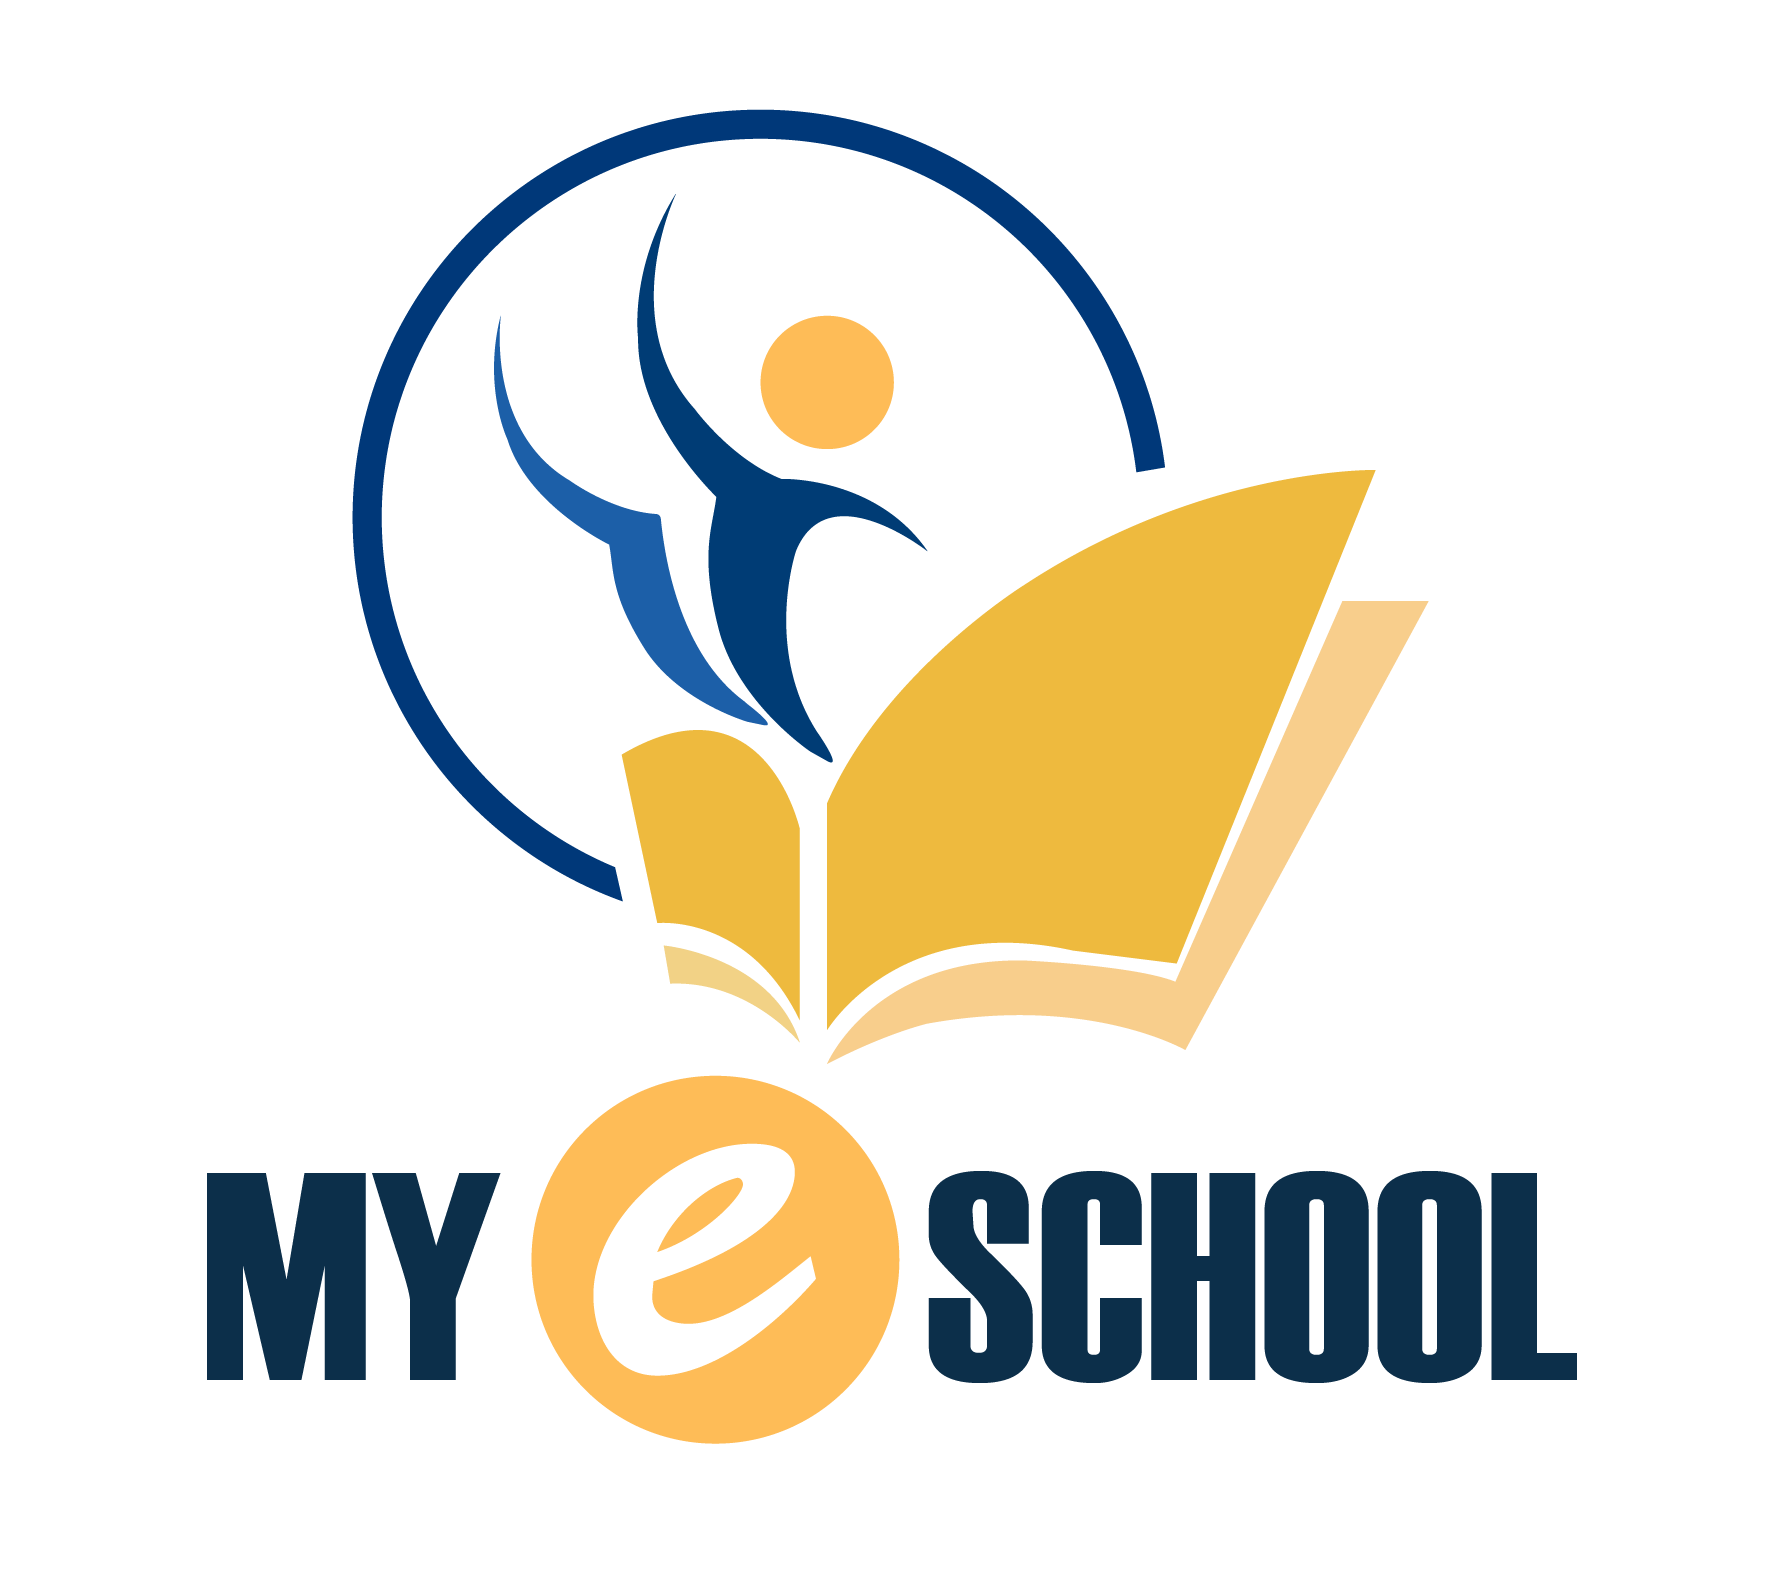 Myeschool logo